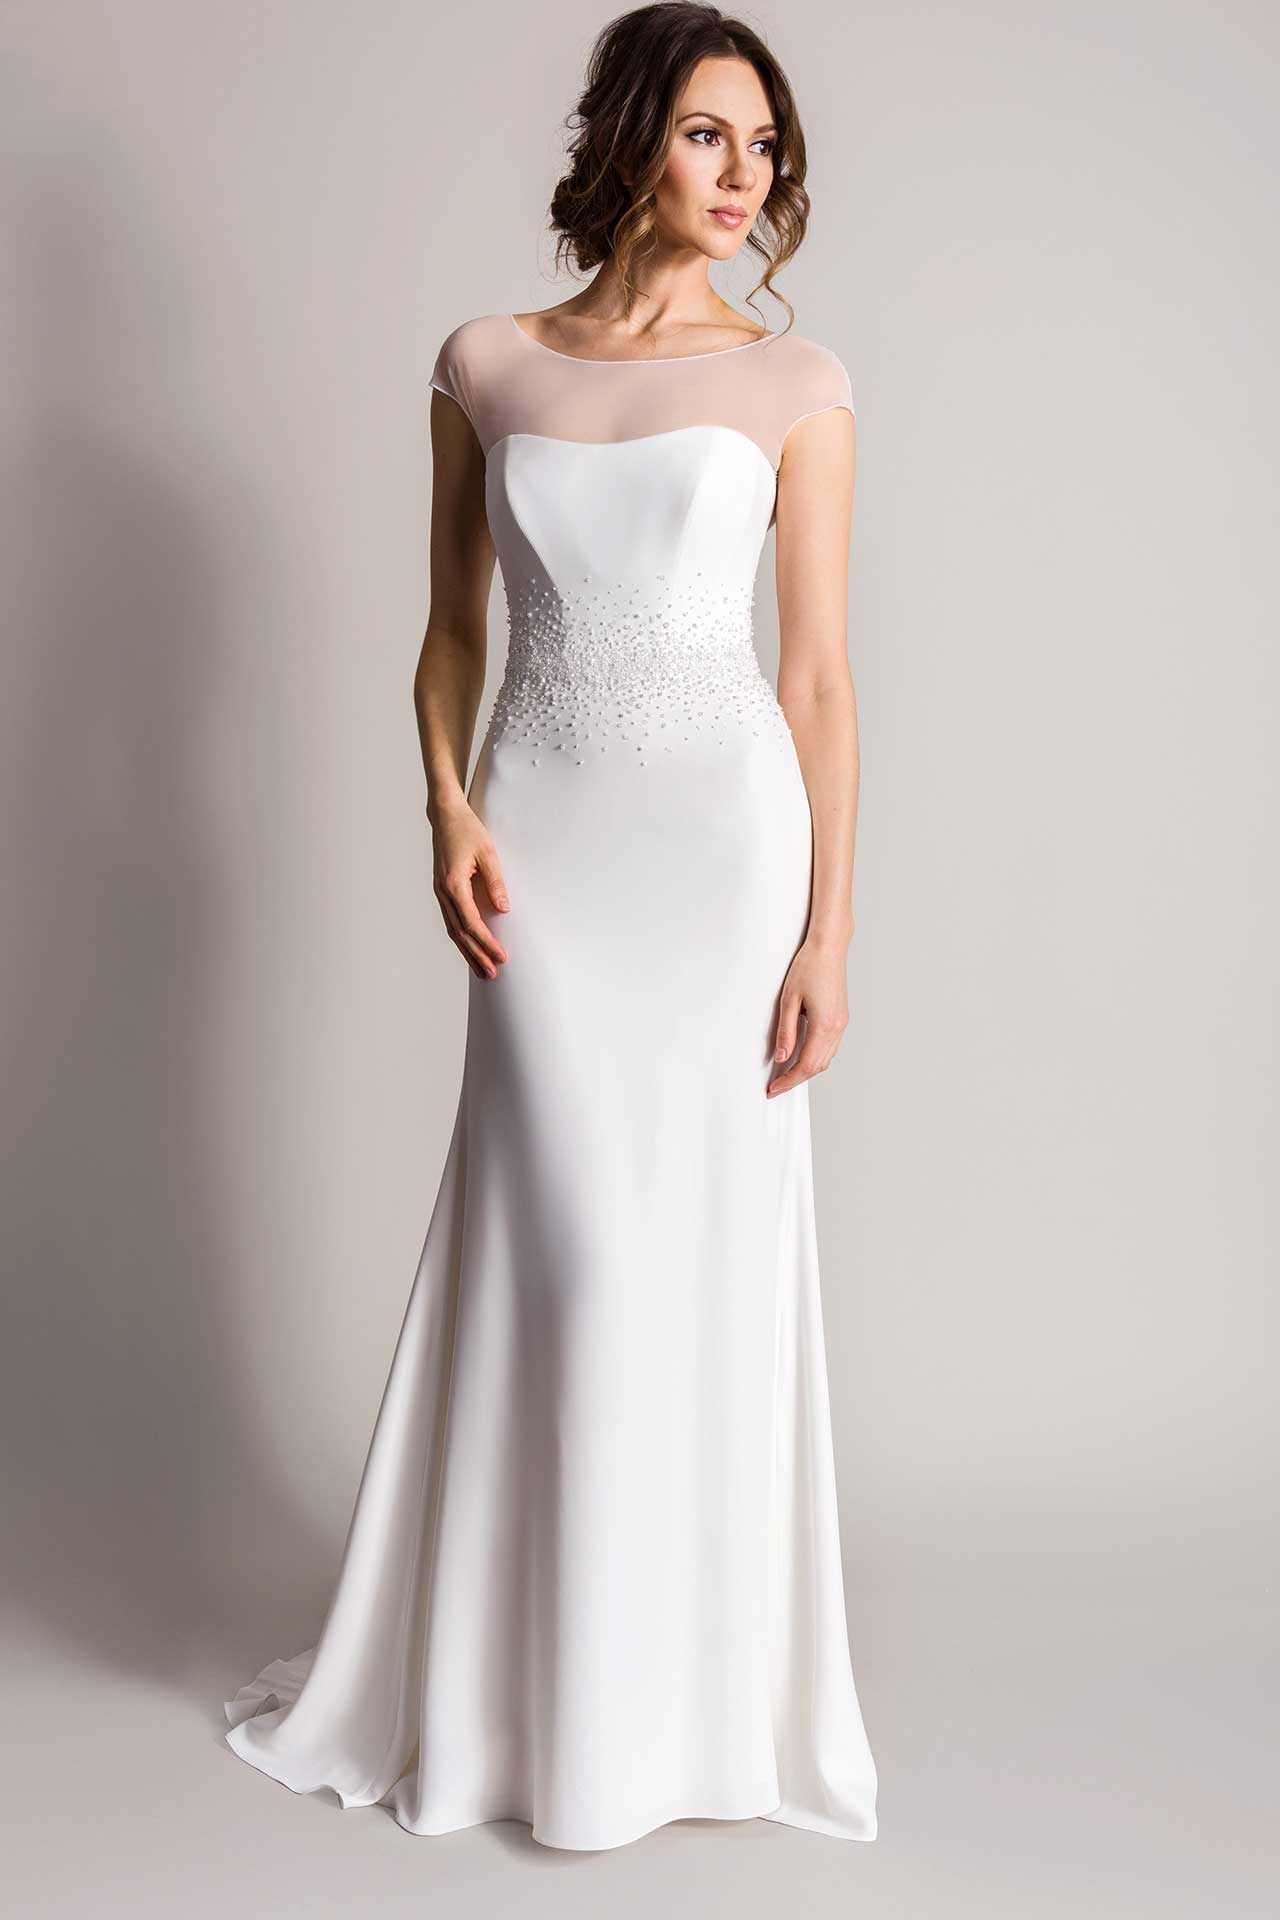 Modern Wedding Dresses
 Sleek And Minimalist Wedding Dresses For Modern Brides